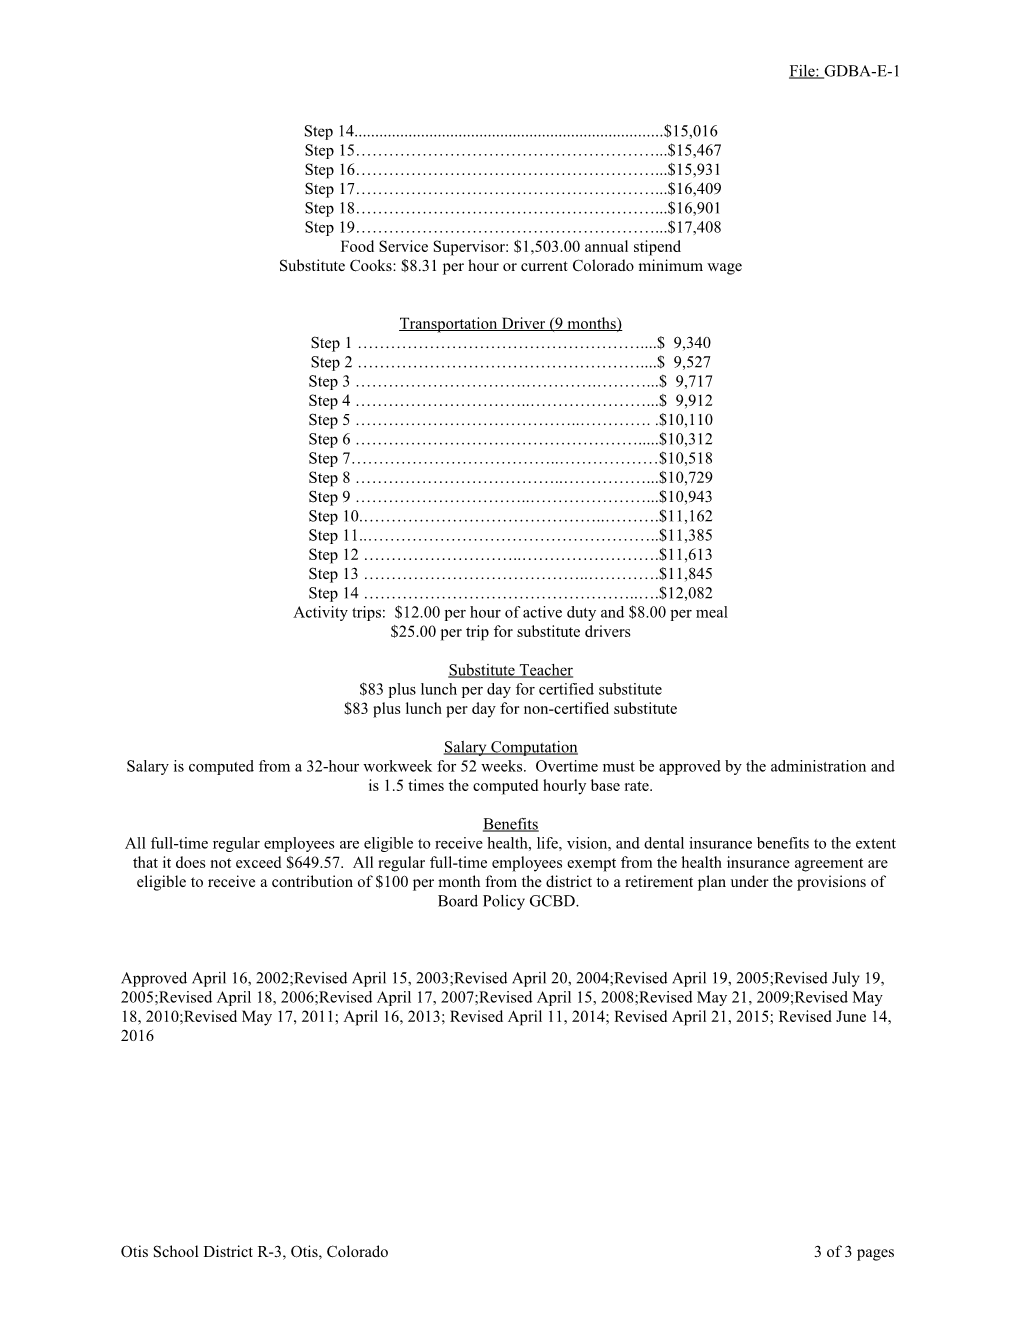 Classified Salary Schedule Summary